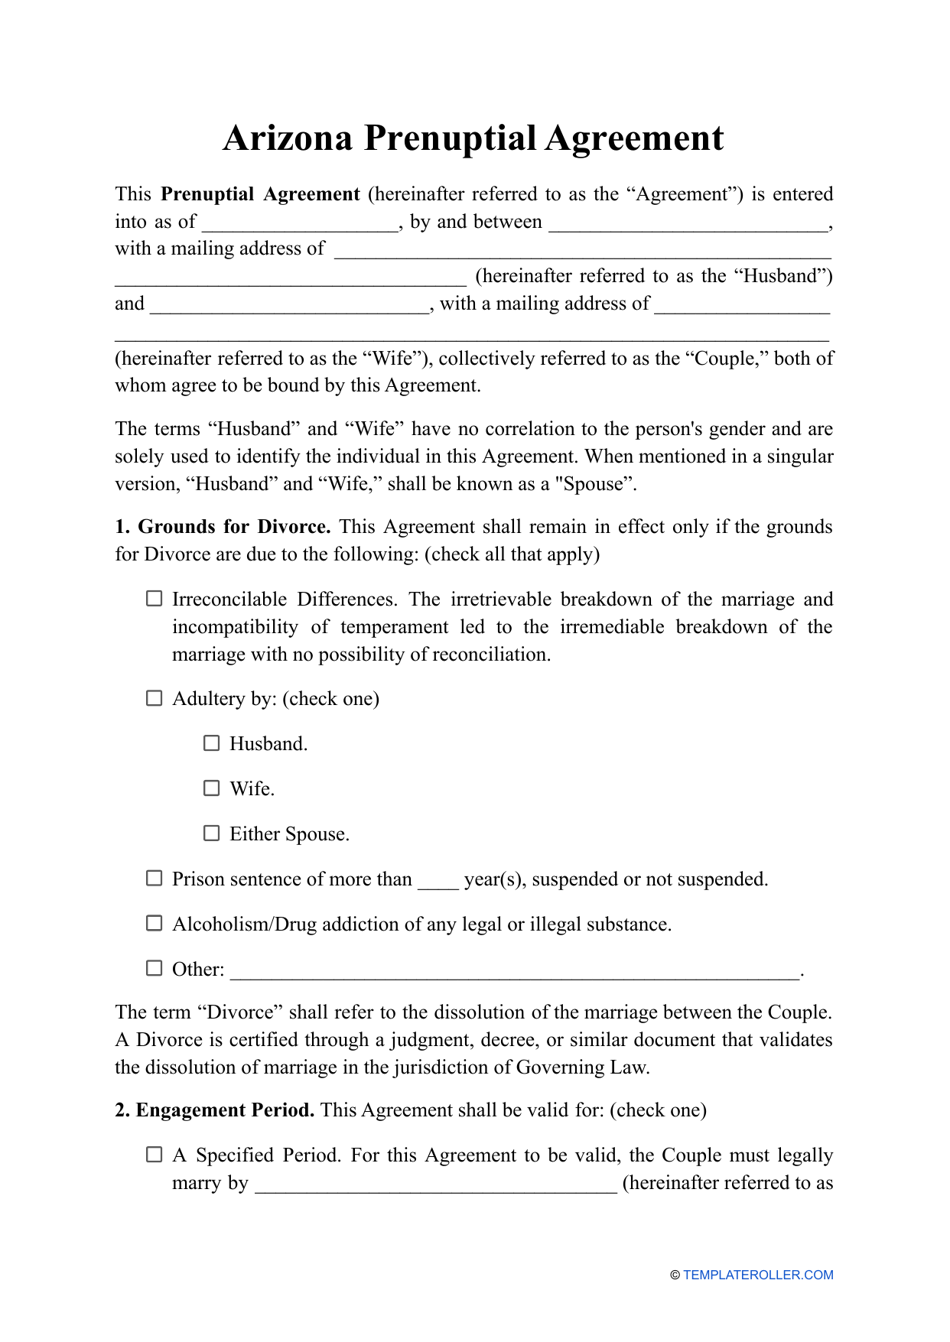 Prenuptial Agreement Template - Arizona, Page 1